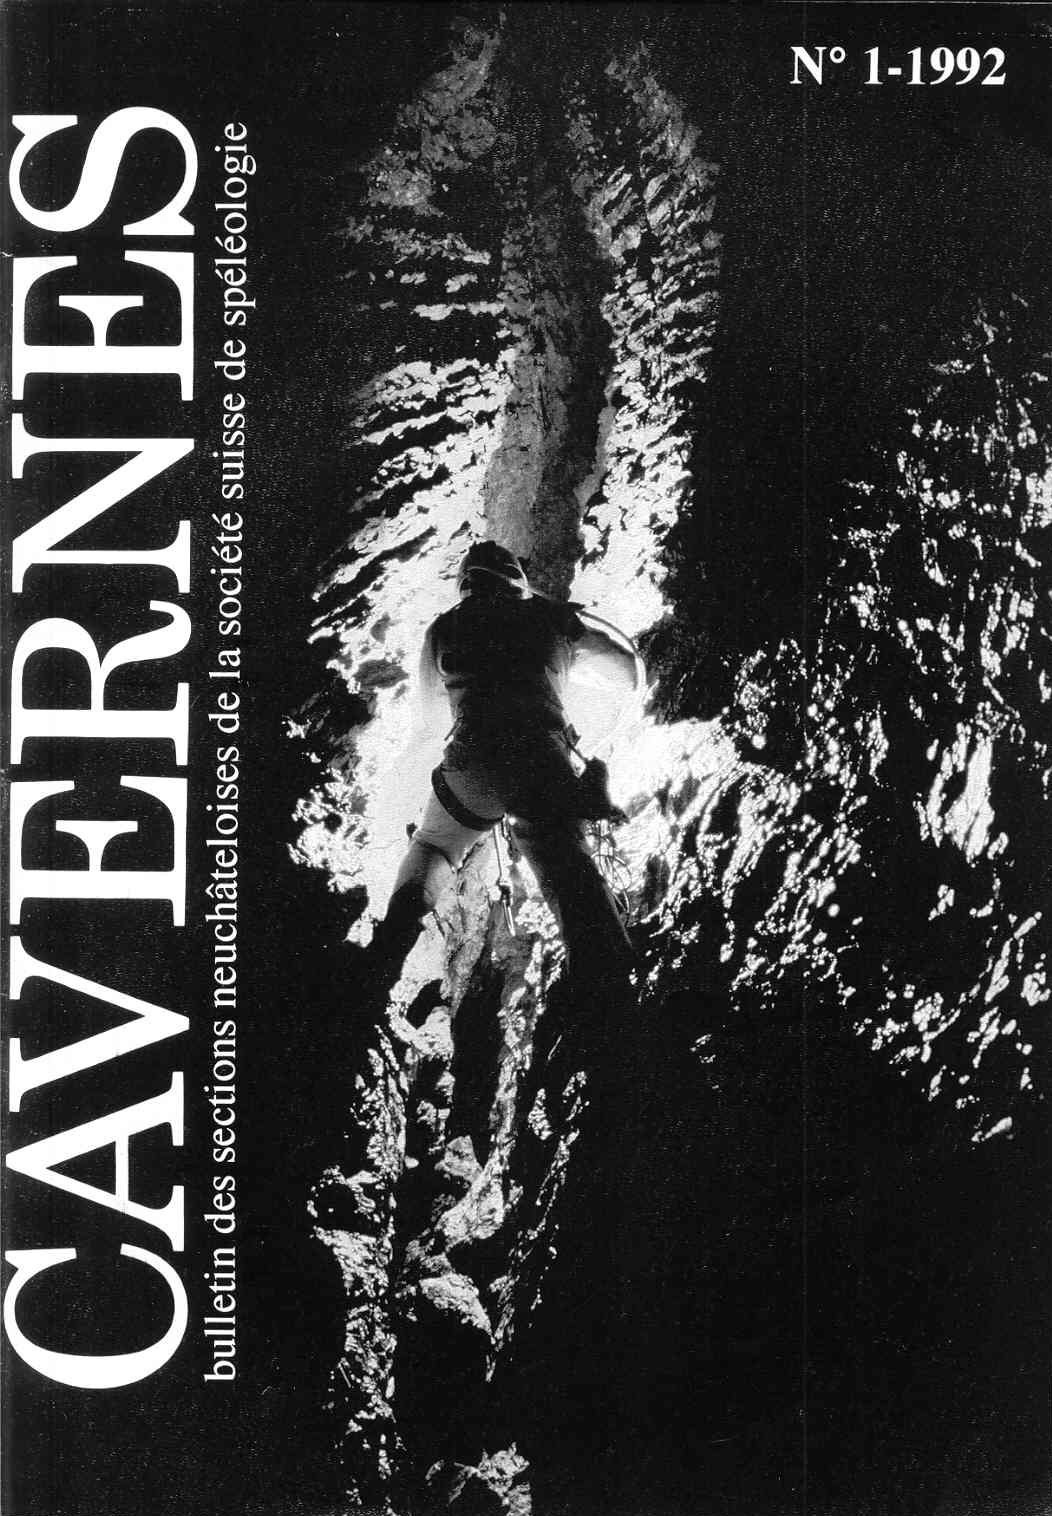 Cavernes/copertina anno 1992 n°1 e 2.jpg